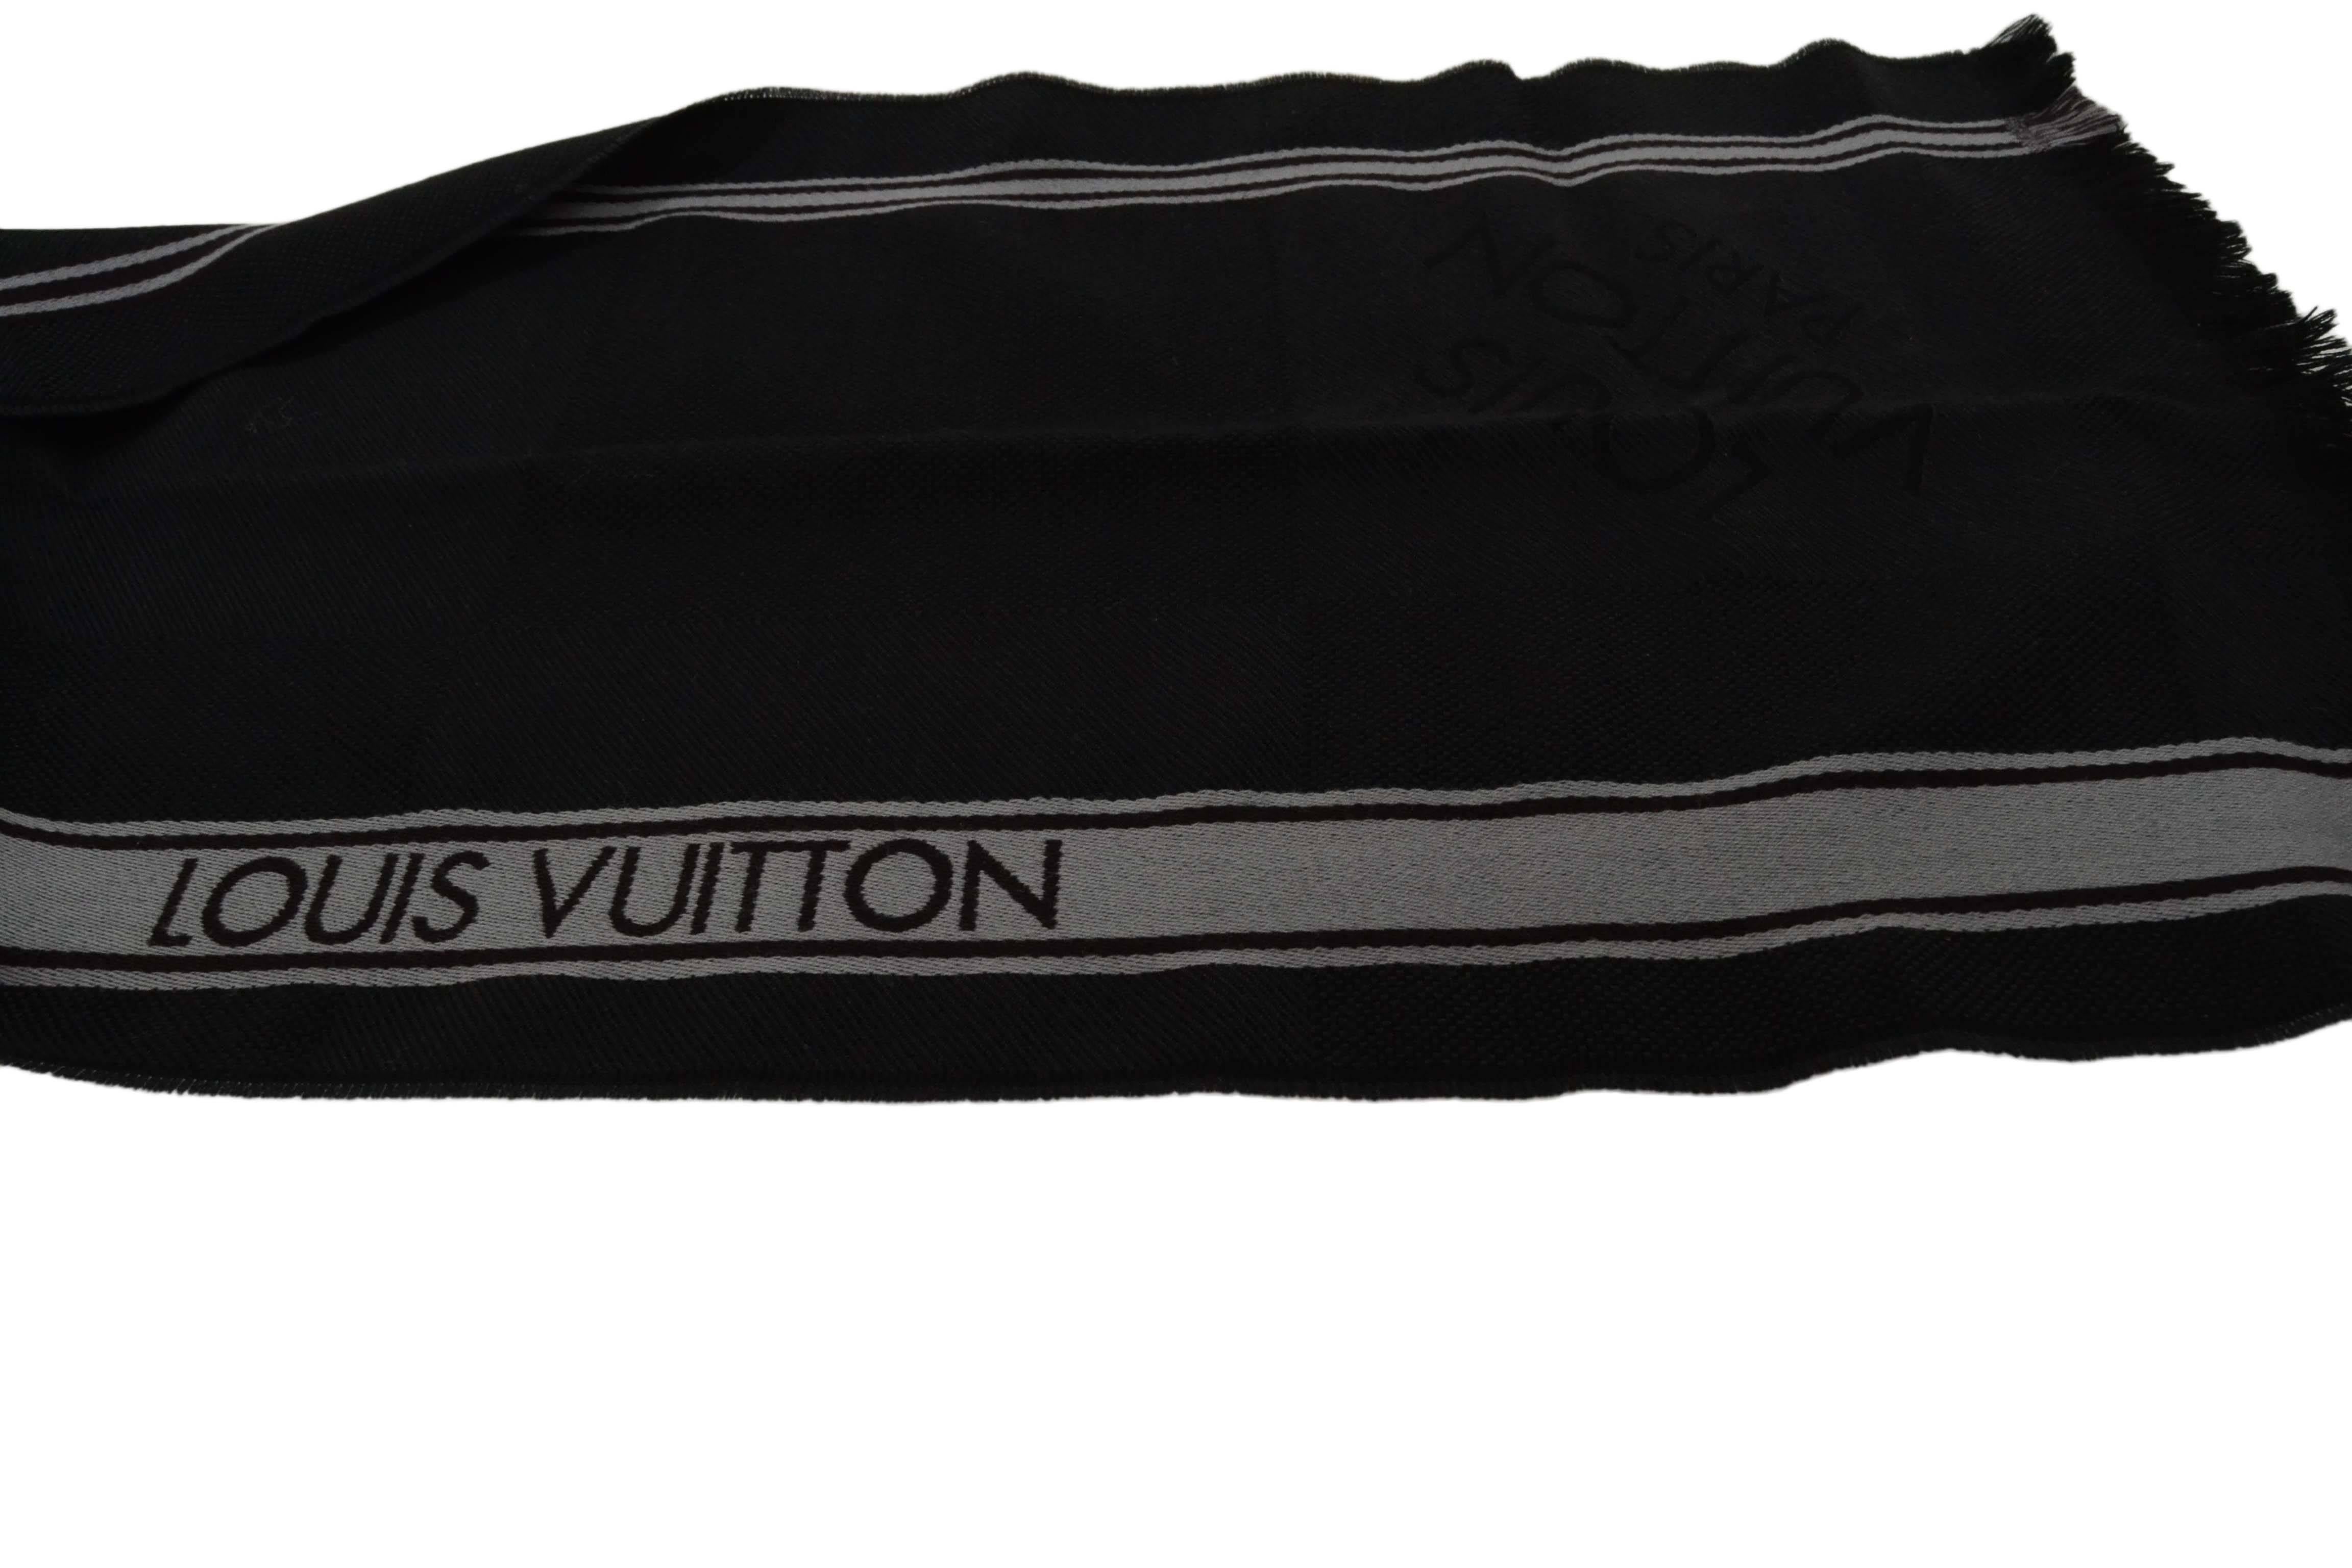 Louis Vuitton Charcoal & Light Grey Stripe Fringe Scarf 
Features 